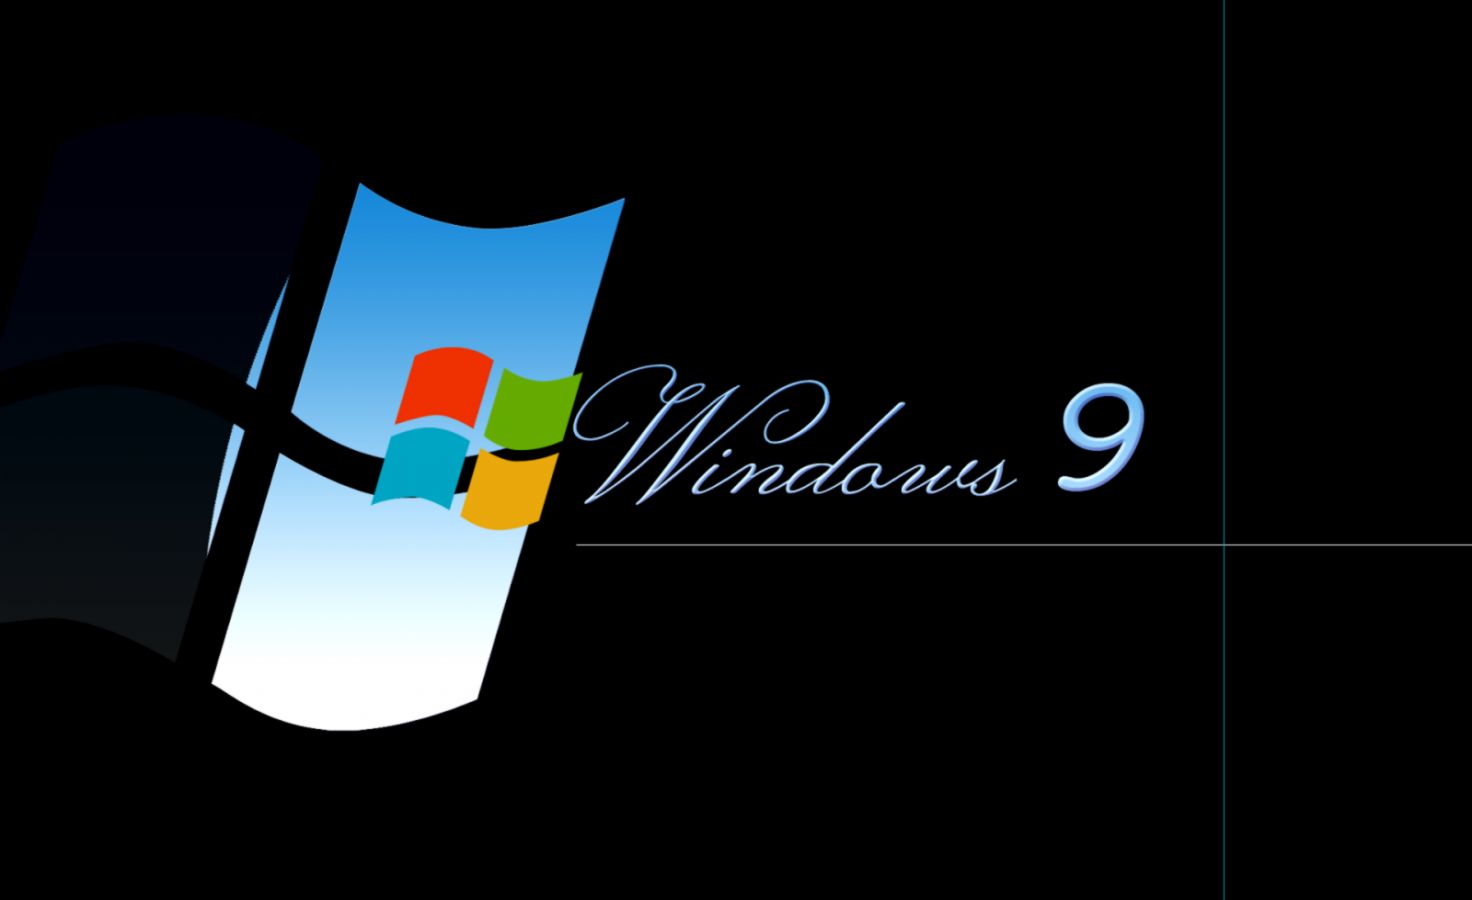 Windows 9 Wallpaper